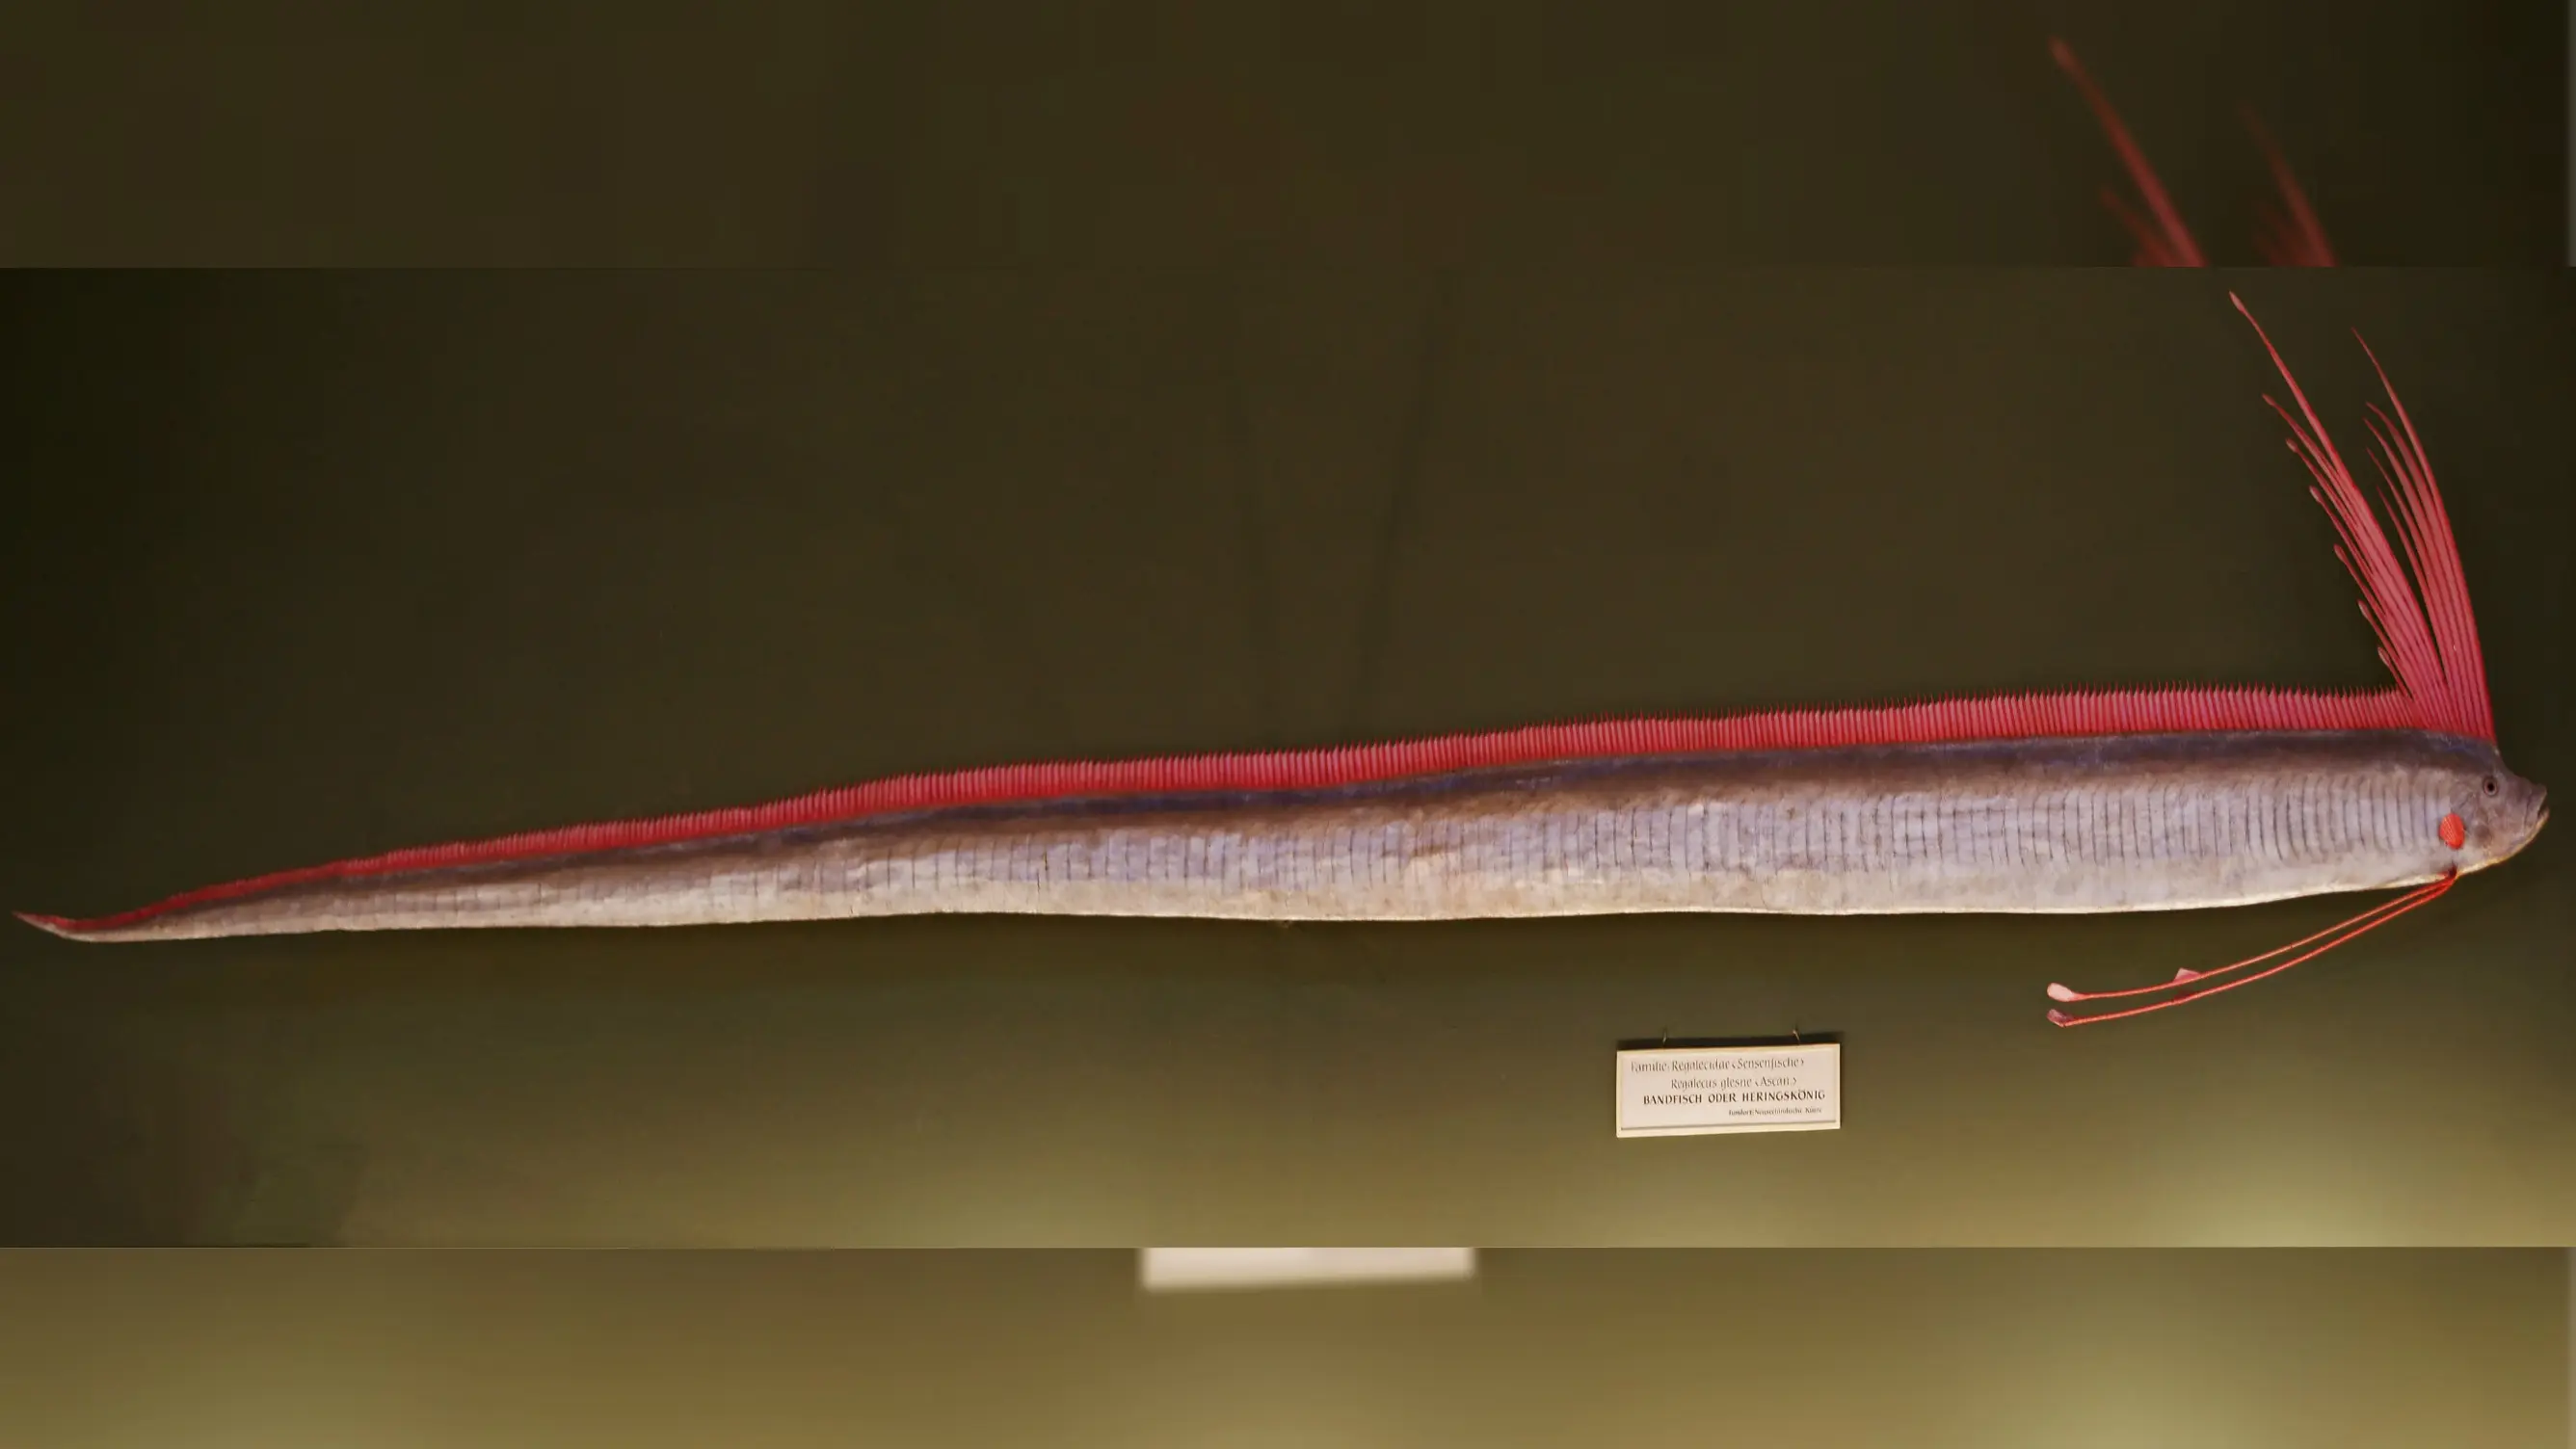 Regaleus glesne atau oarfish raksasa (wikimedia commons)